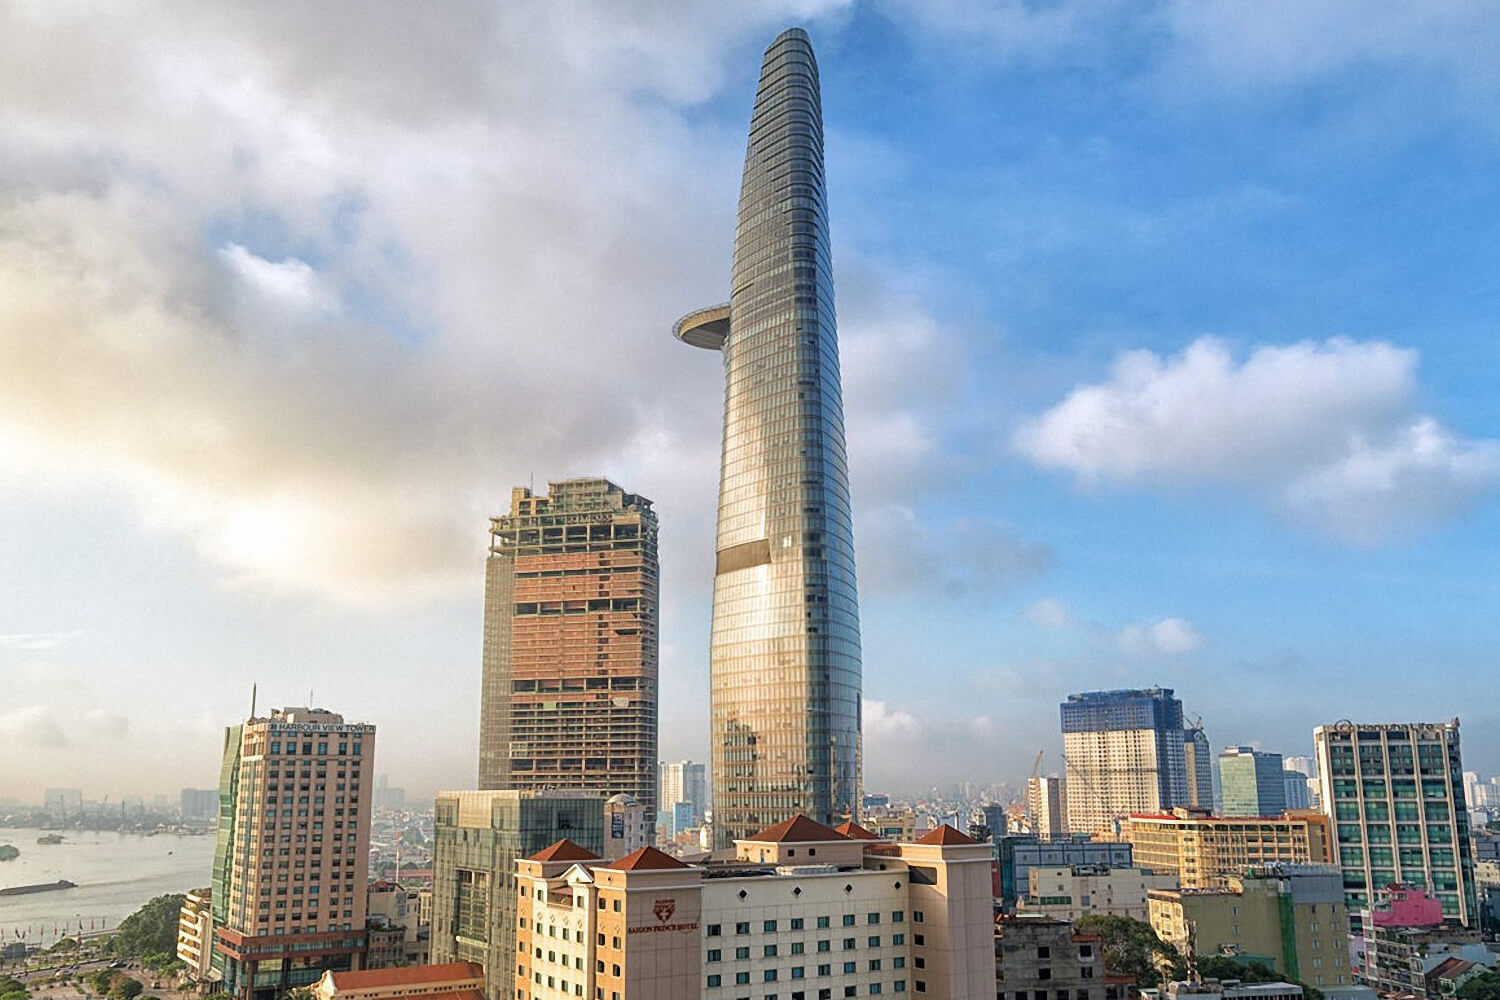 Bitexco Financial Tower - Ho Chi Minh City